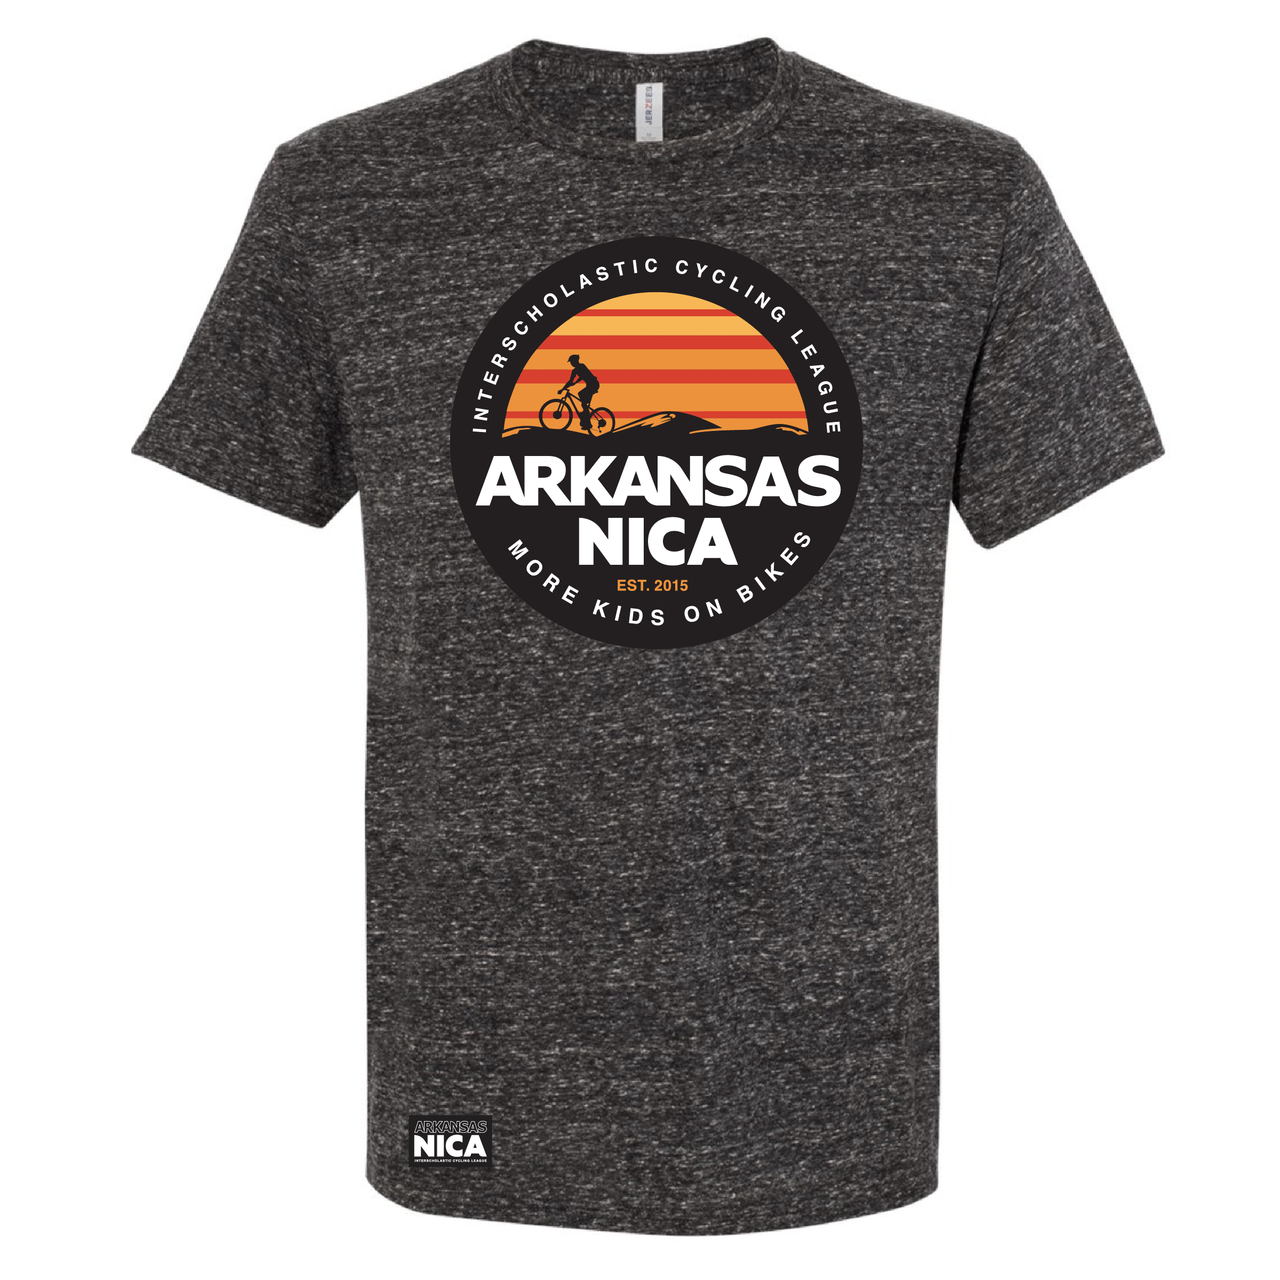 Arkansas NICA Round Logo Tee